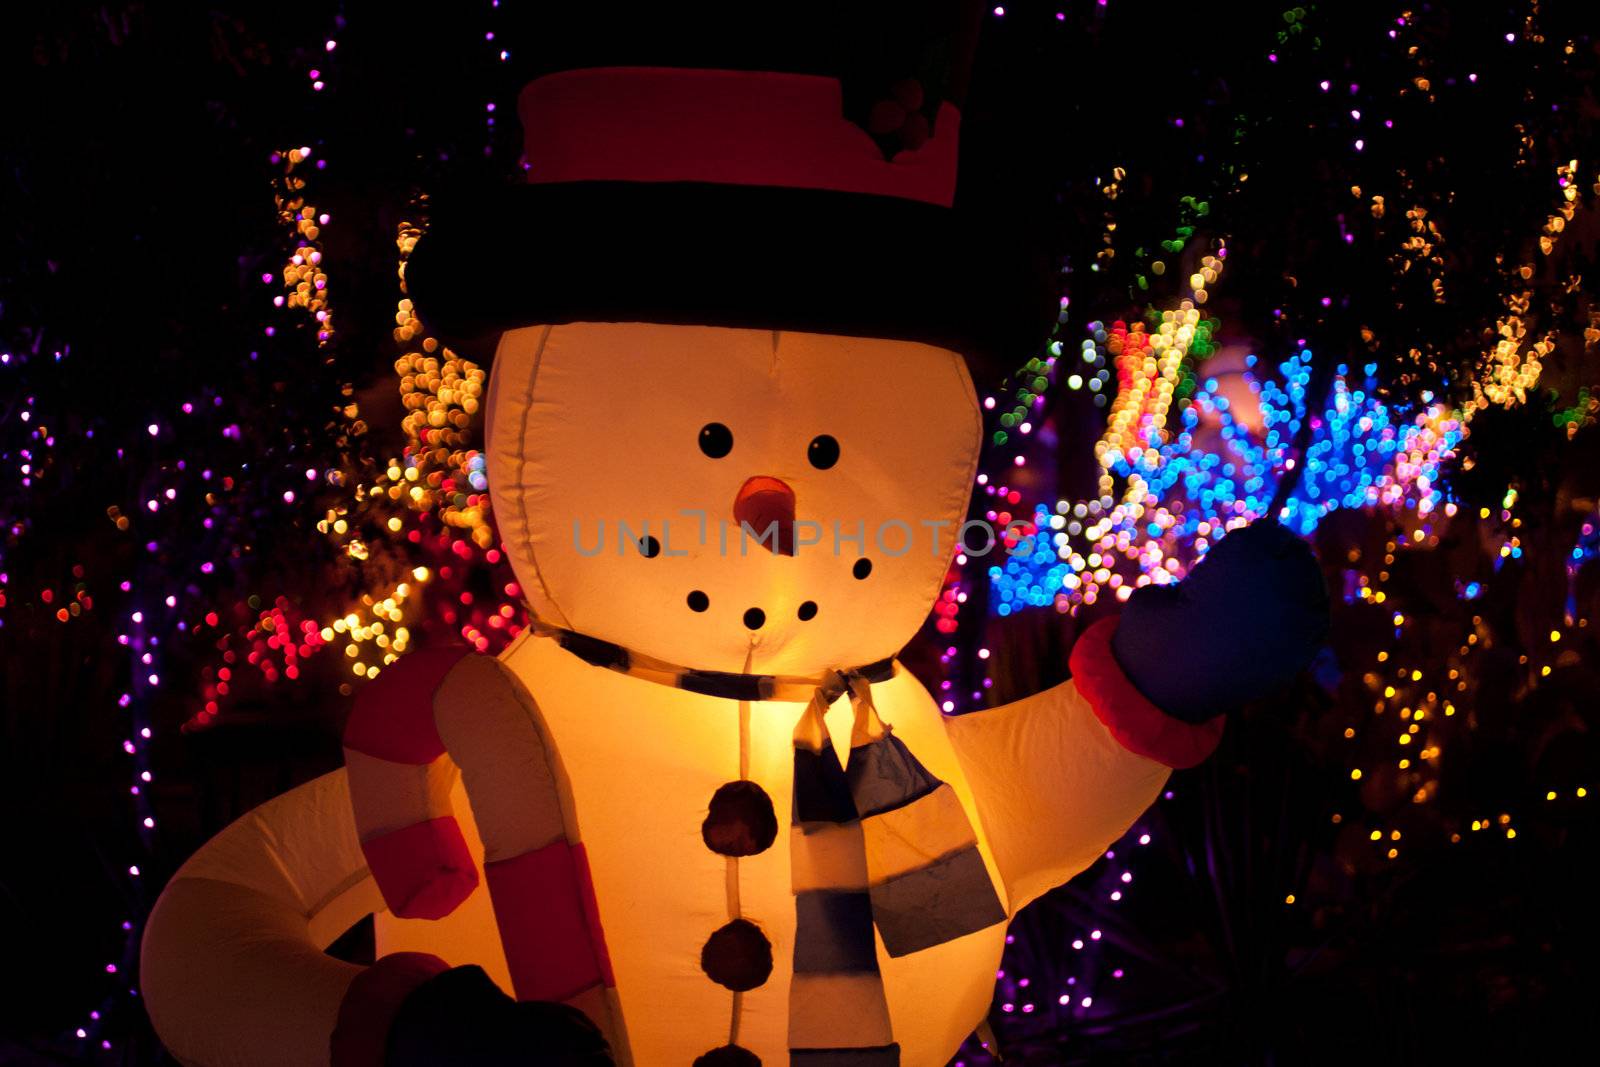 illuminated inflatable snow man with x-mas lights